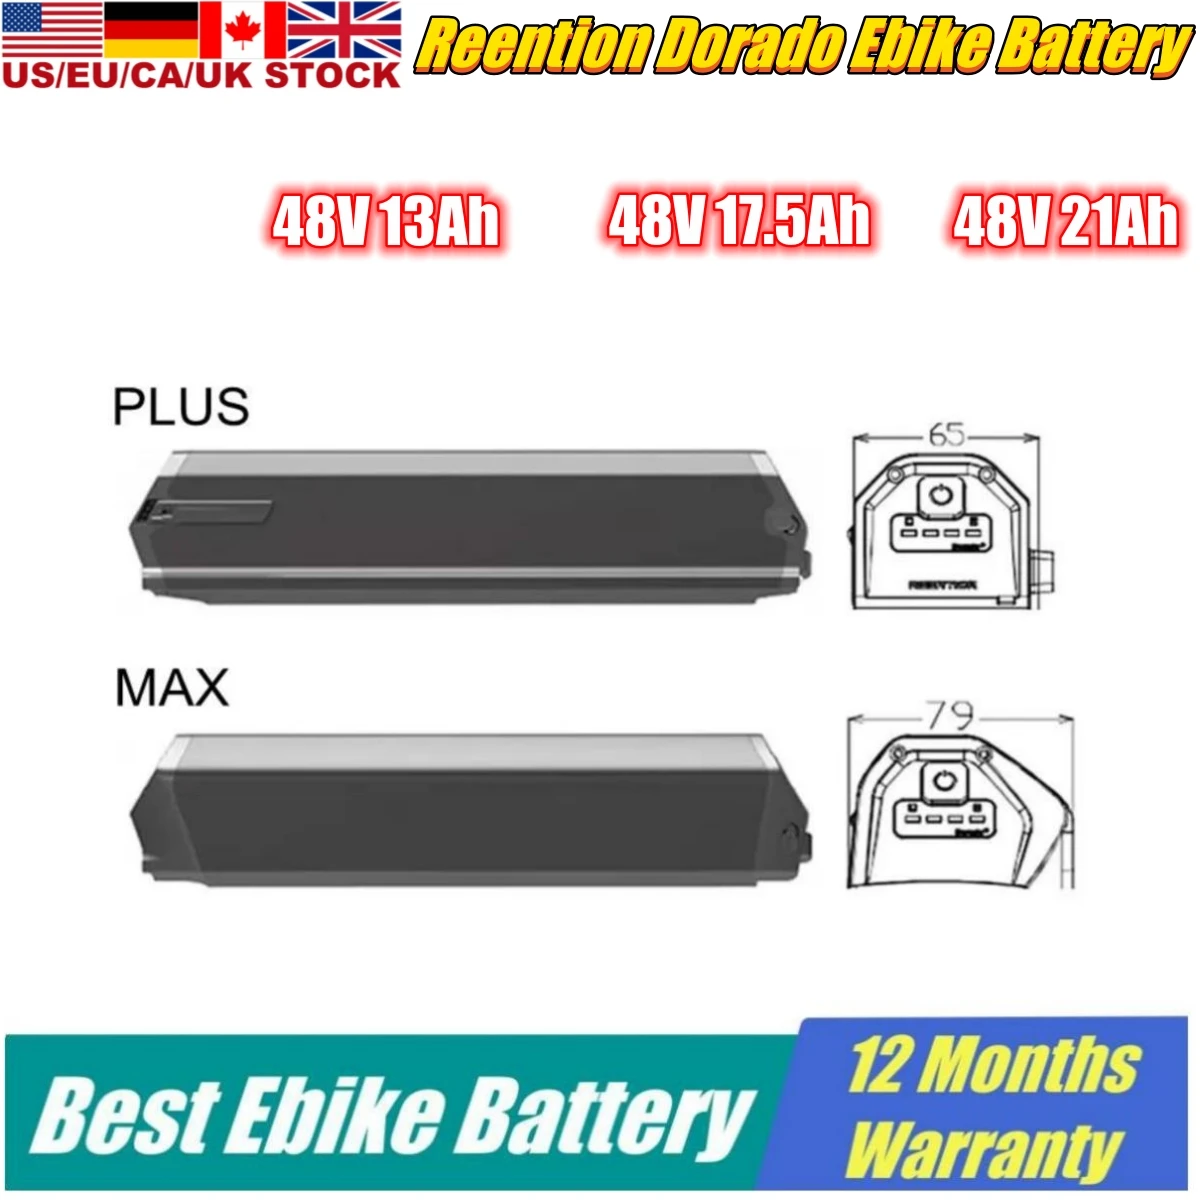 

48volt Magnum i6 Electric Bike Battery Reention Dorado Plus Batteria 17.5ah 48V 13Ah 20ah 21ah Ebike Batteries Pack